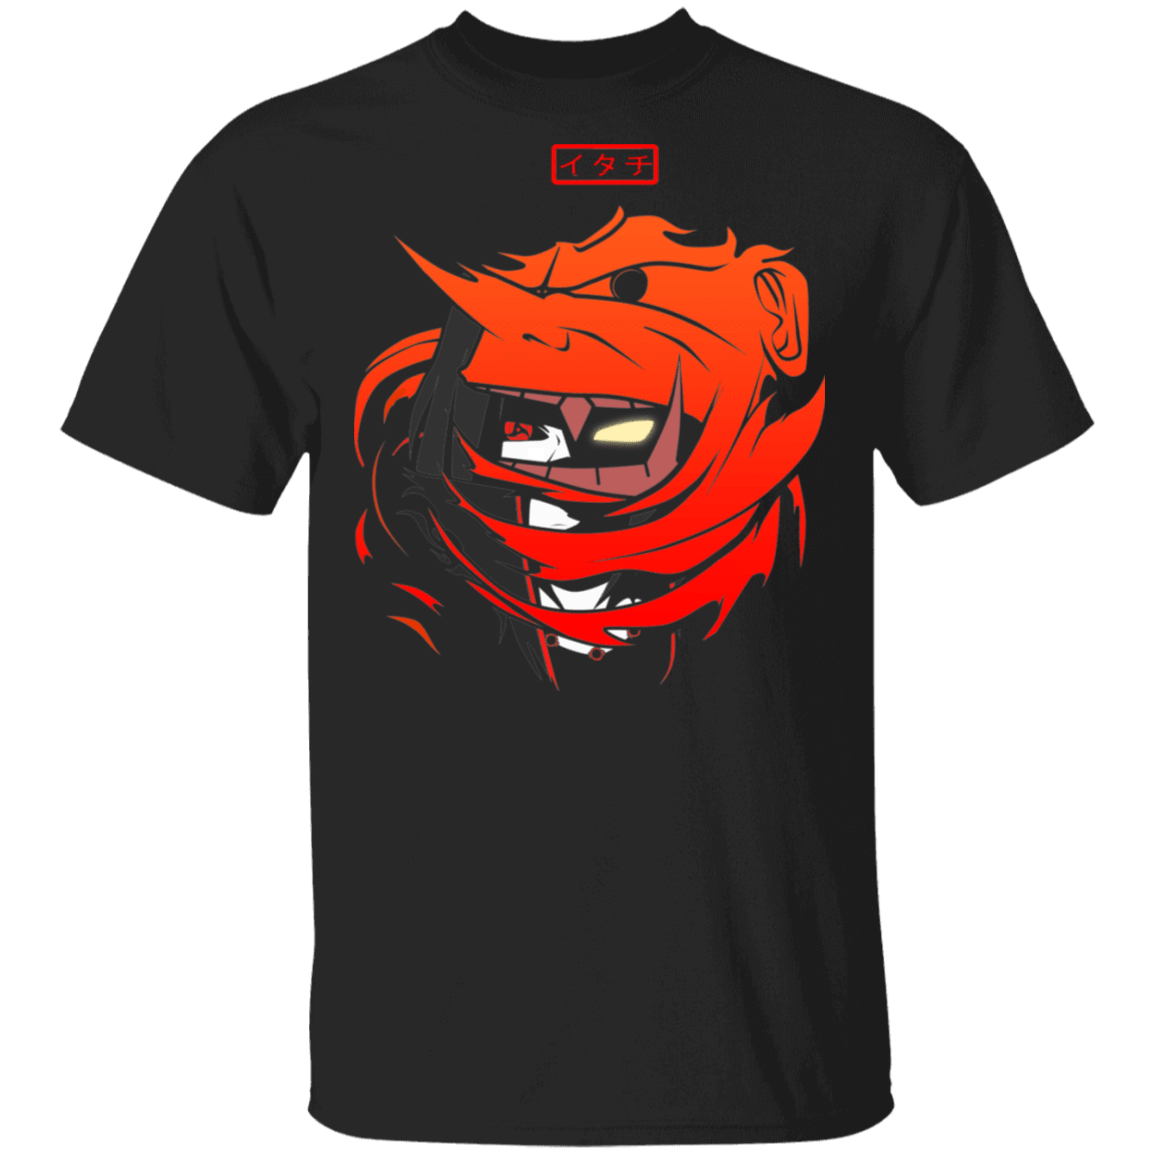 T-Shirts Black / S Itachi Susanoo T-Shirt